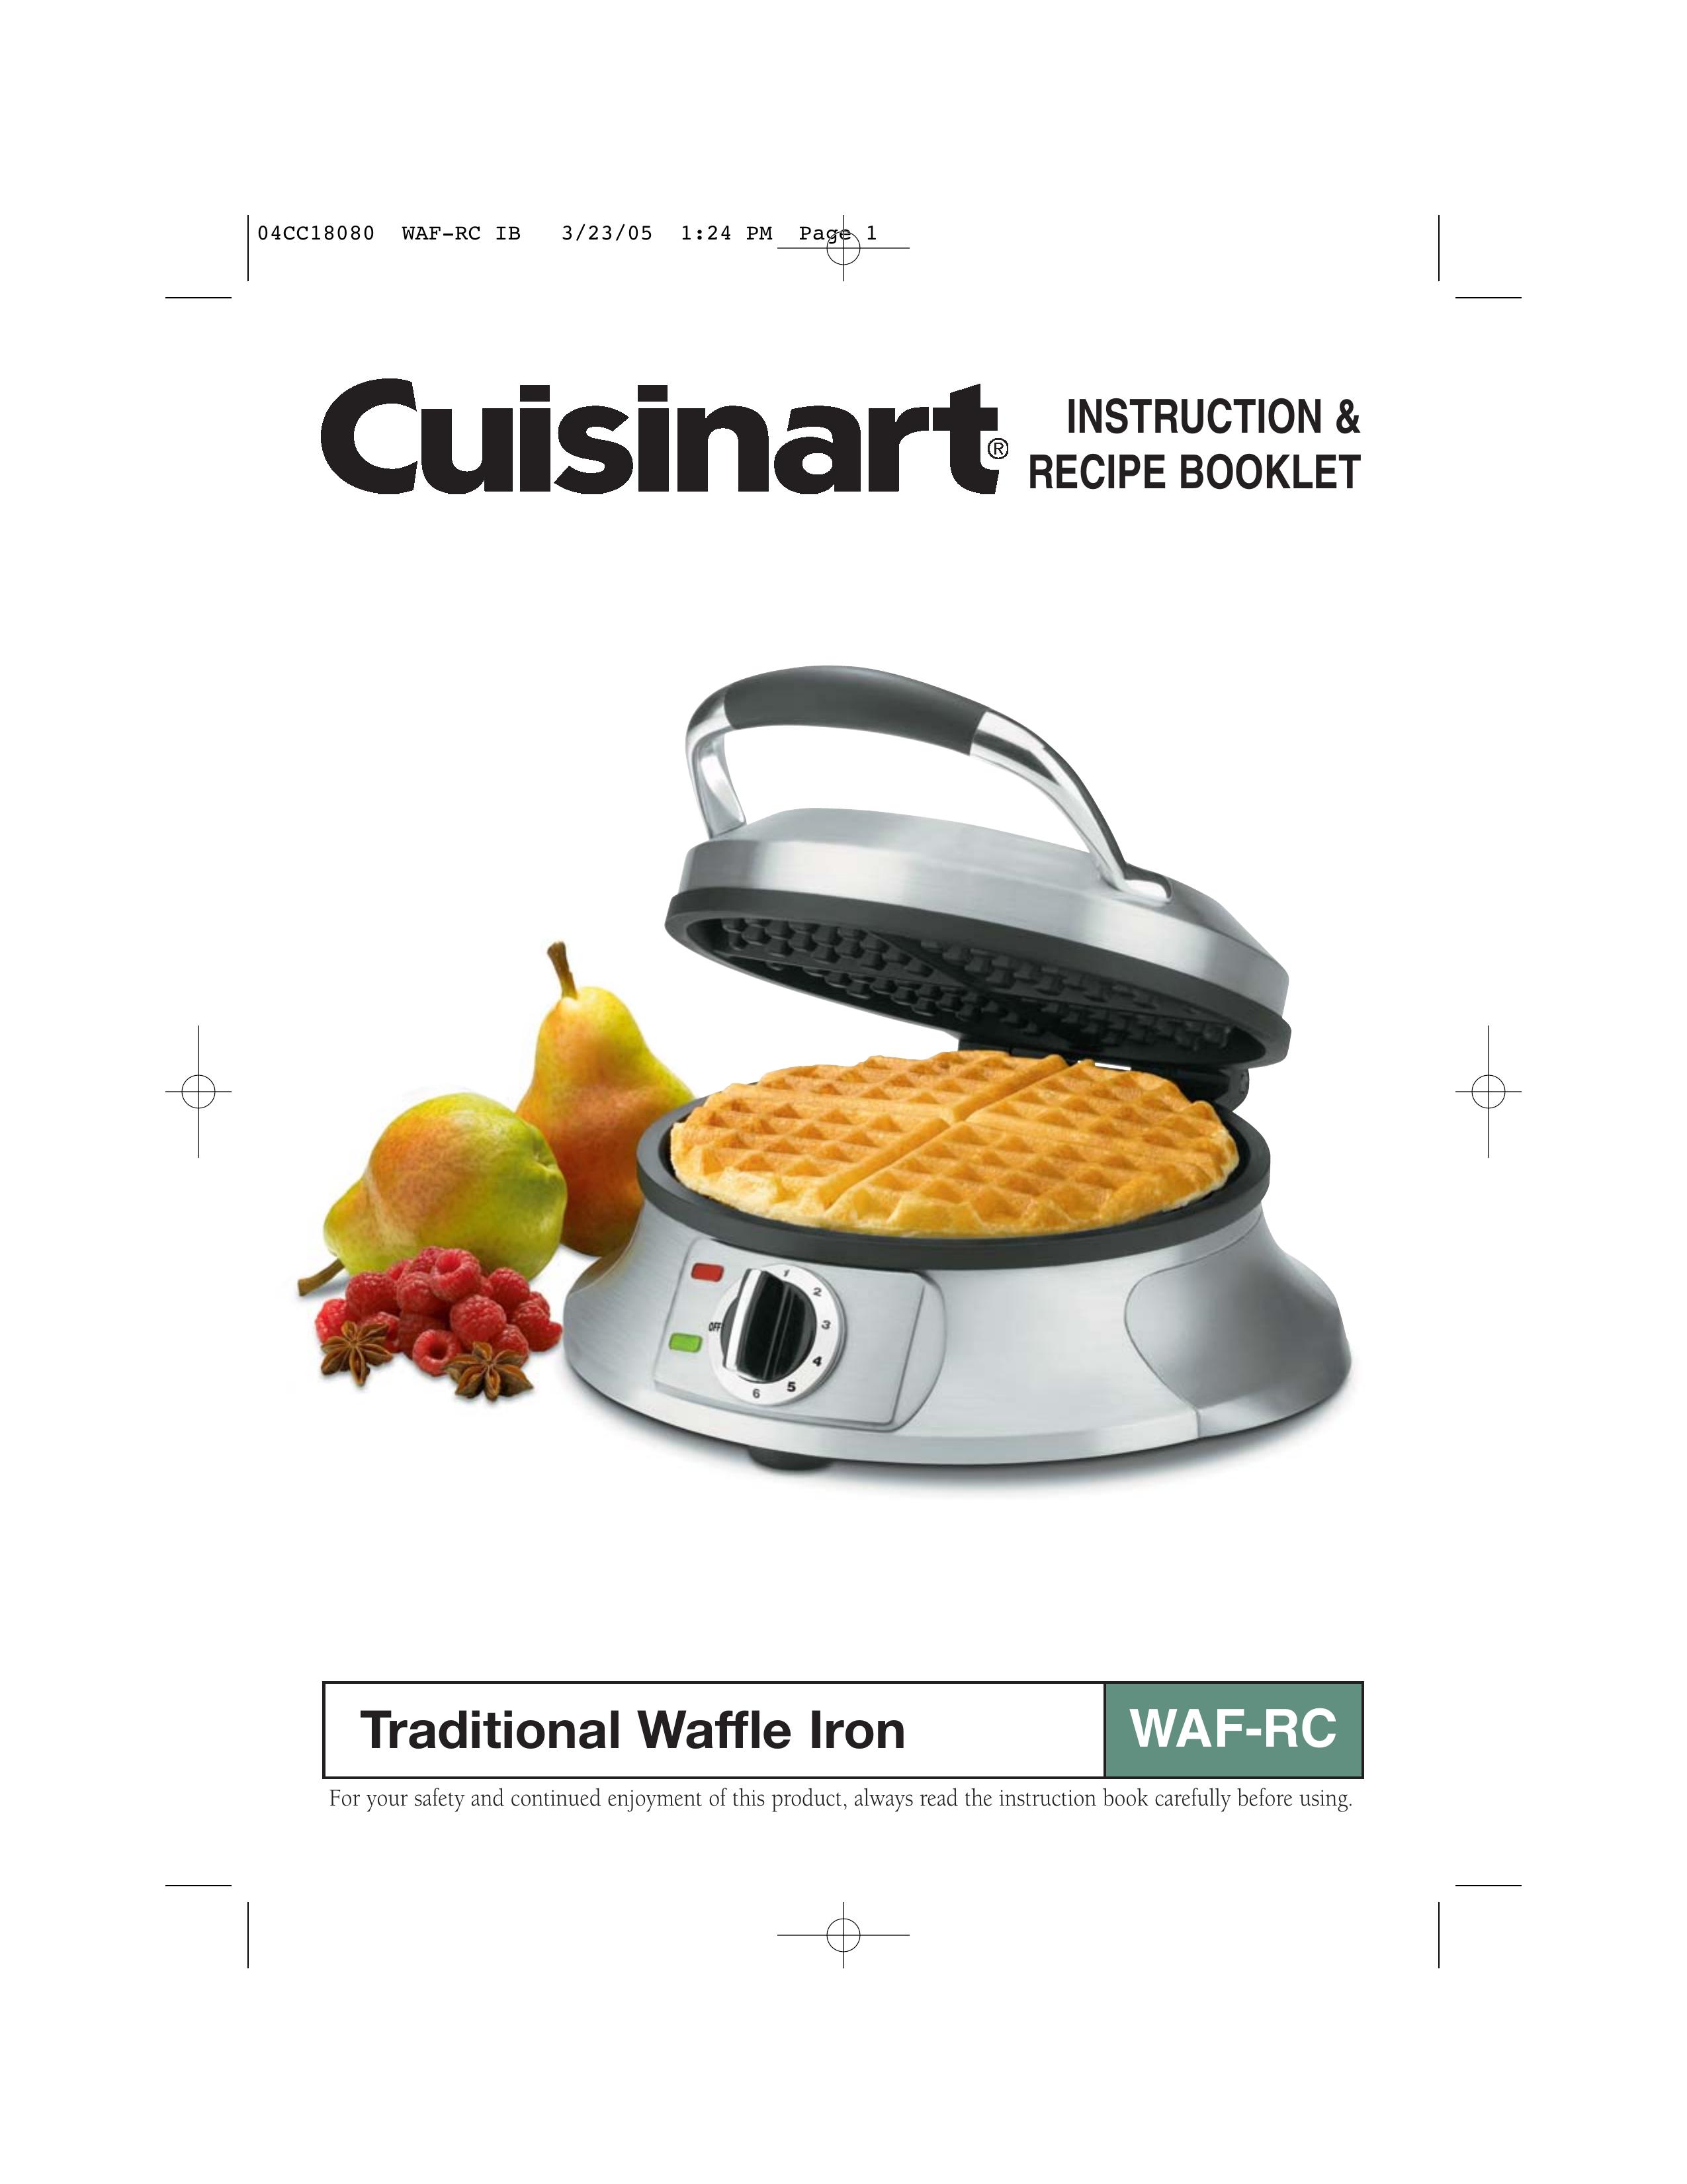 Cuisinart WAF-RC Waffle Iron User Manual